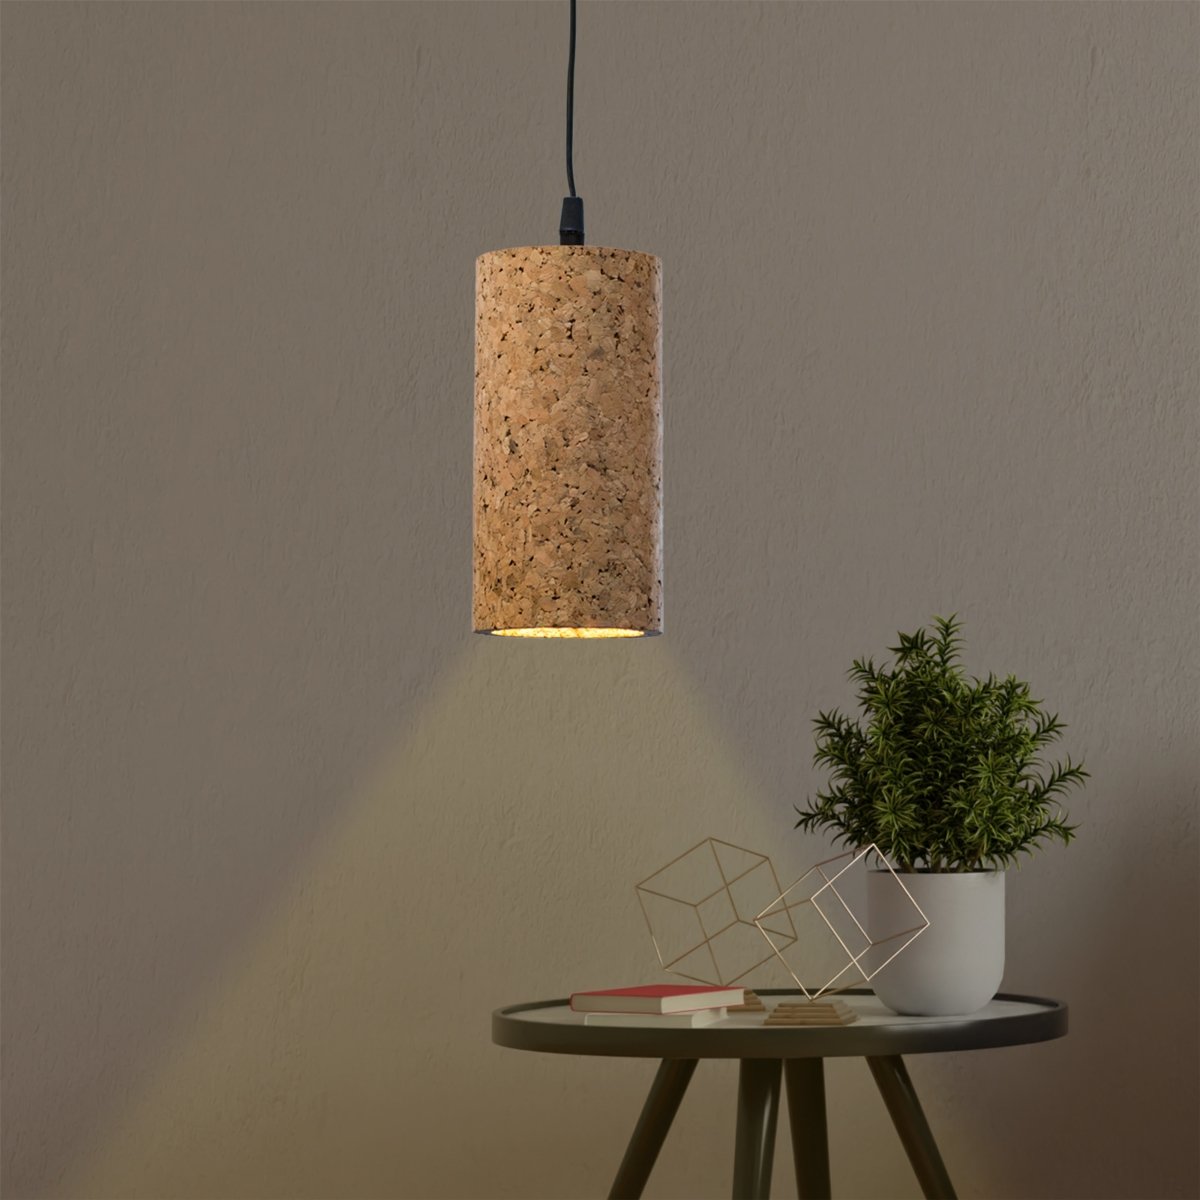 Kezevel Cork Decorative Hanging Light - Natural Cork Brown Cylindrical Pendant Light for Living Room, Balcony, Foyer Bedroom